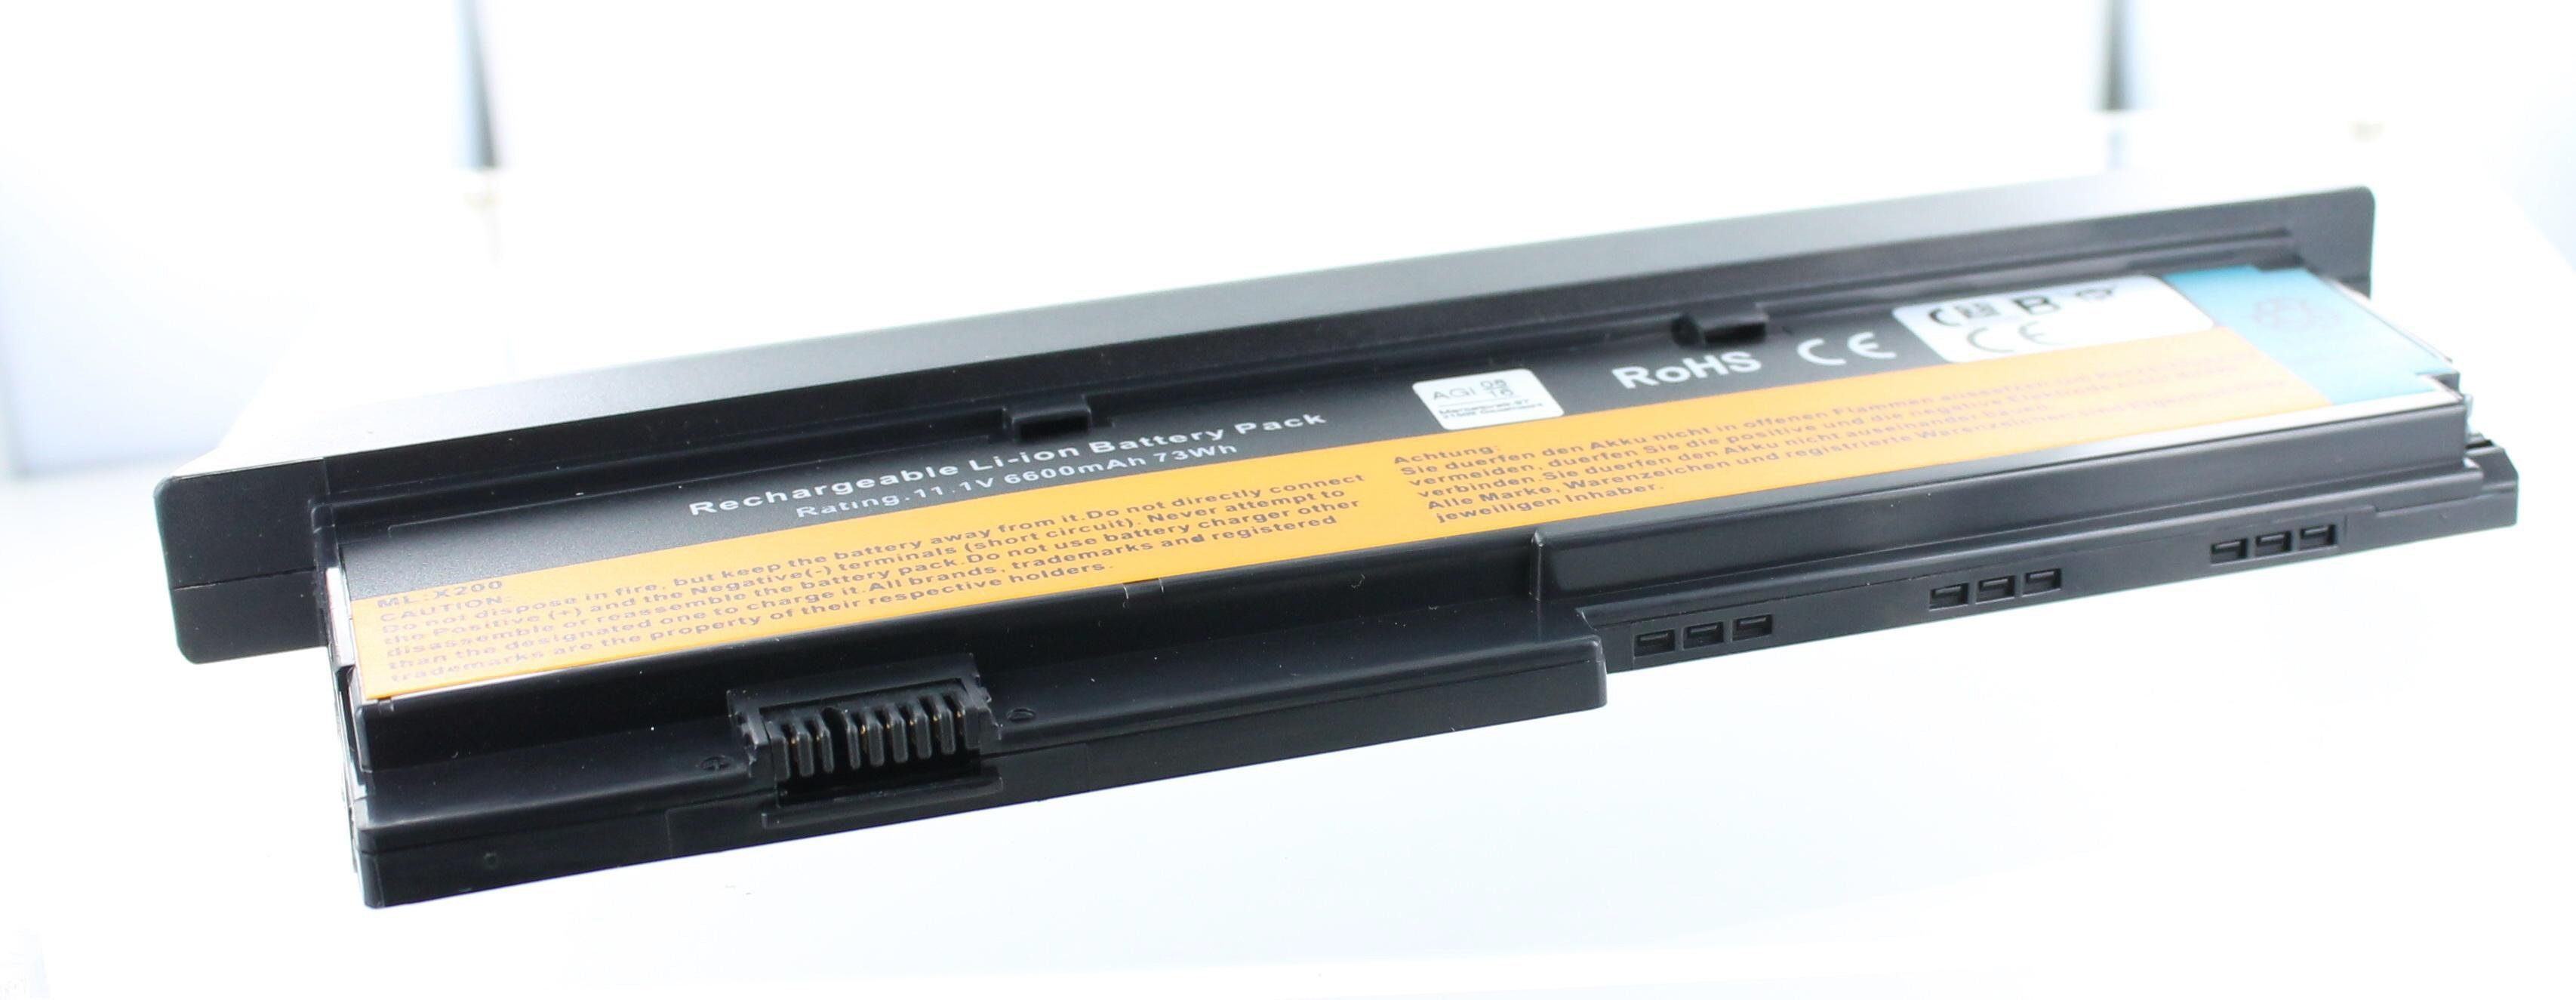 AGI ThinkPad kompatibel X200 mit Lenovo Akku Akku Akku schwarz